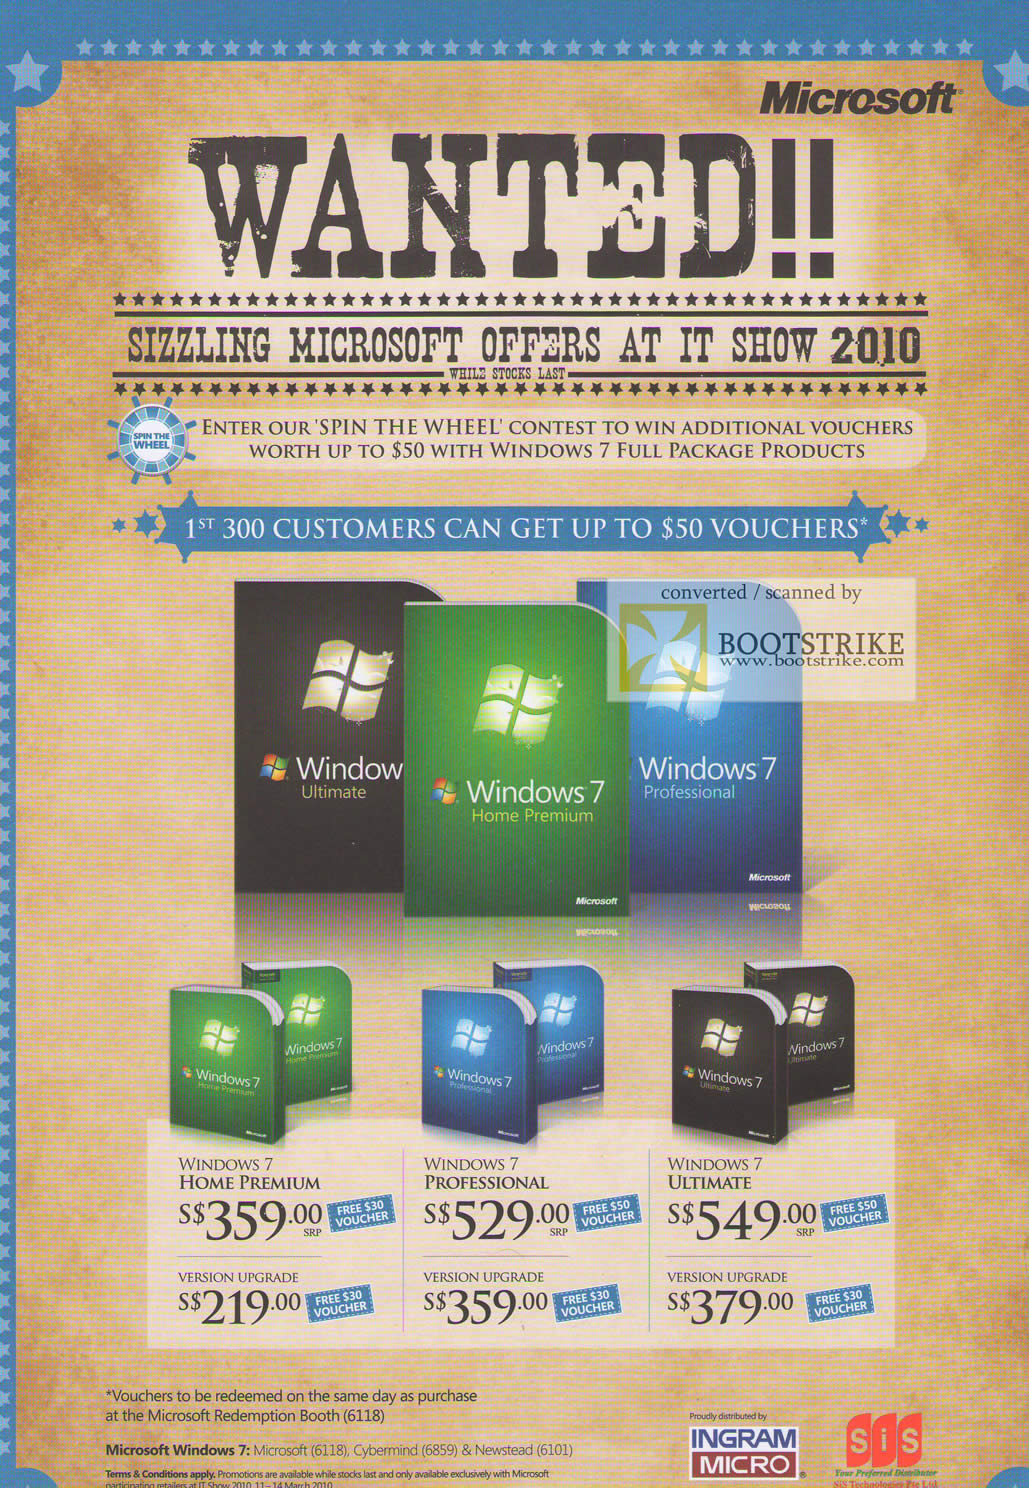 IT Show 2010 price list image brochure of Microsoft Windows 7 Home Premium Professional Ultimate Upgrade